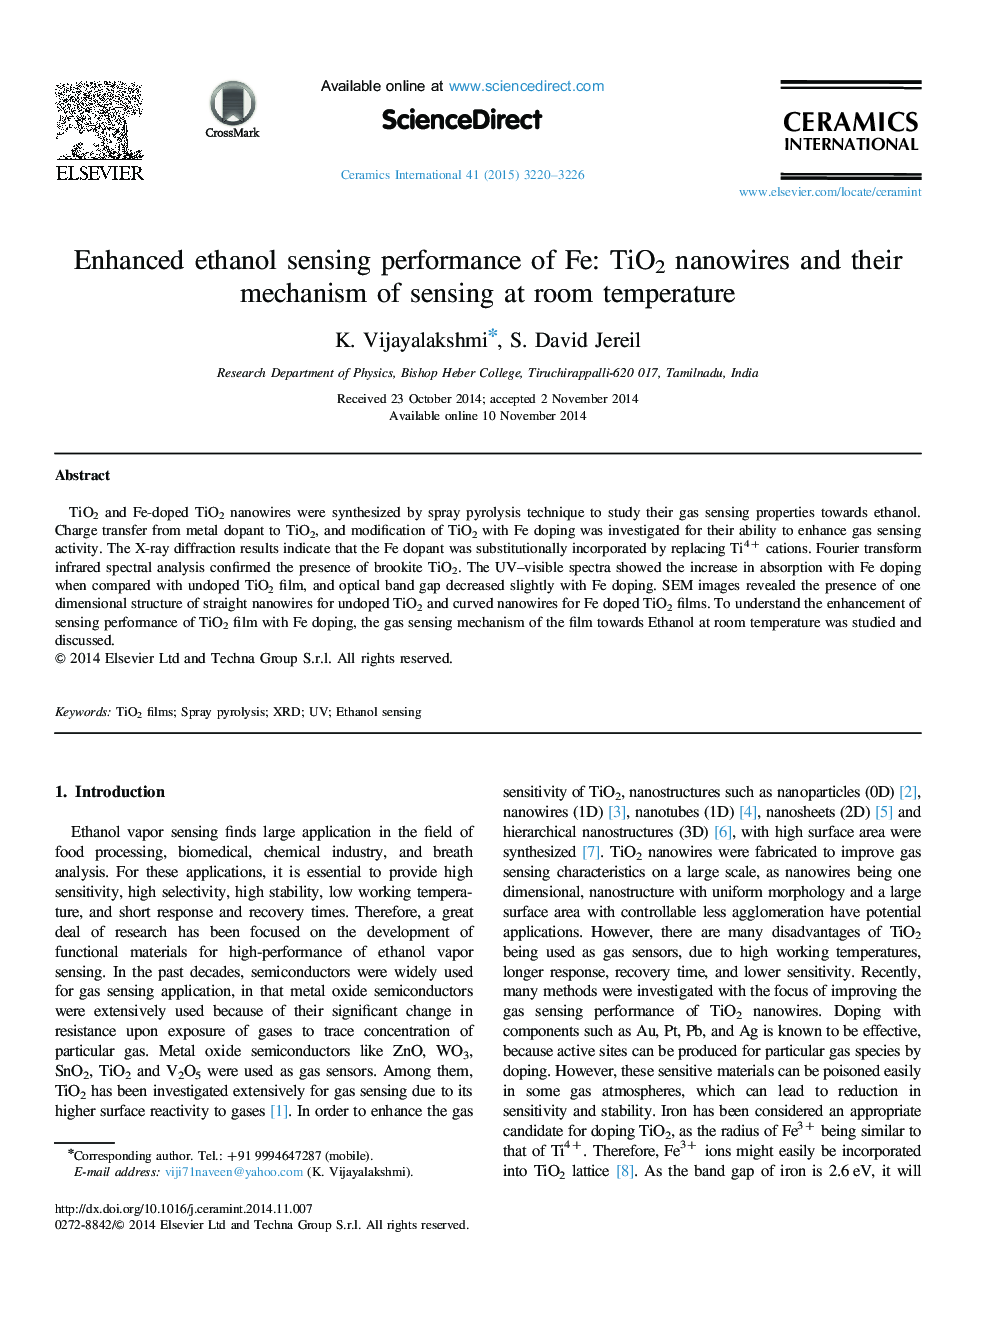 Enhanced ethanol sensing performance of Fe: TiO2 nanowires and their mechanism of sensing at room temperature